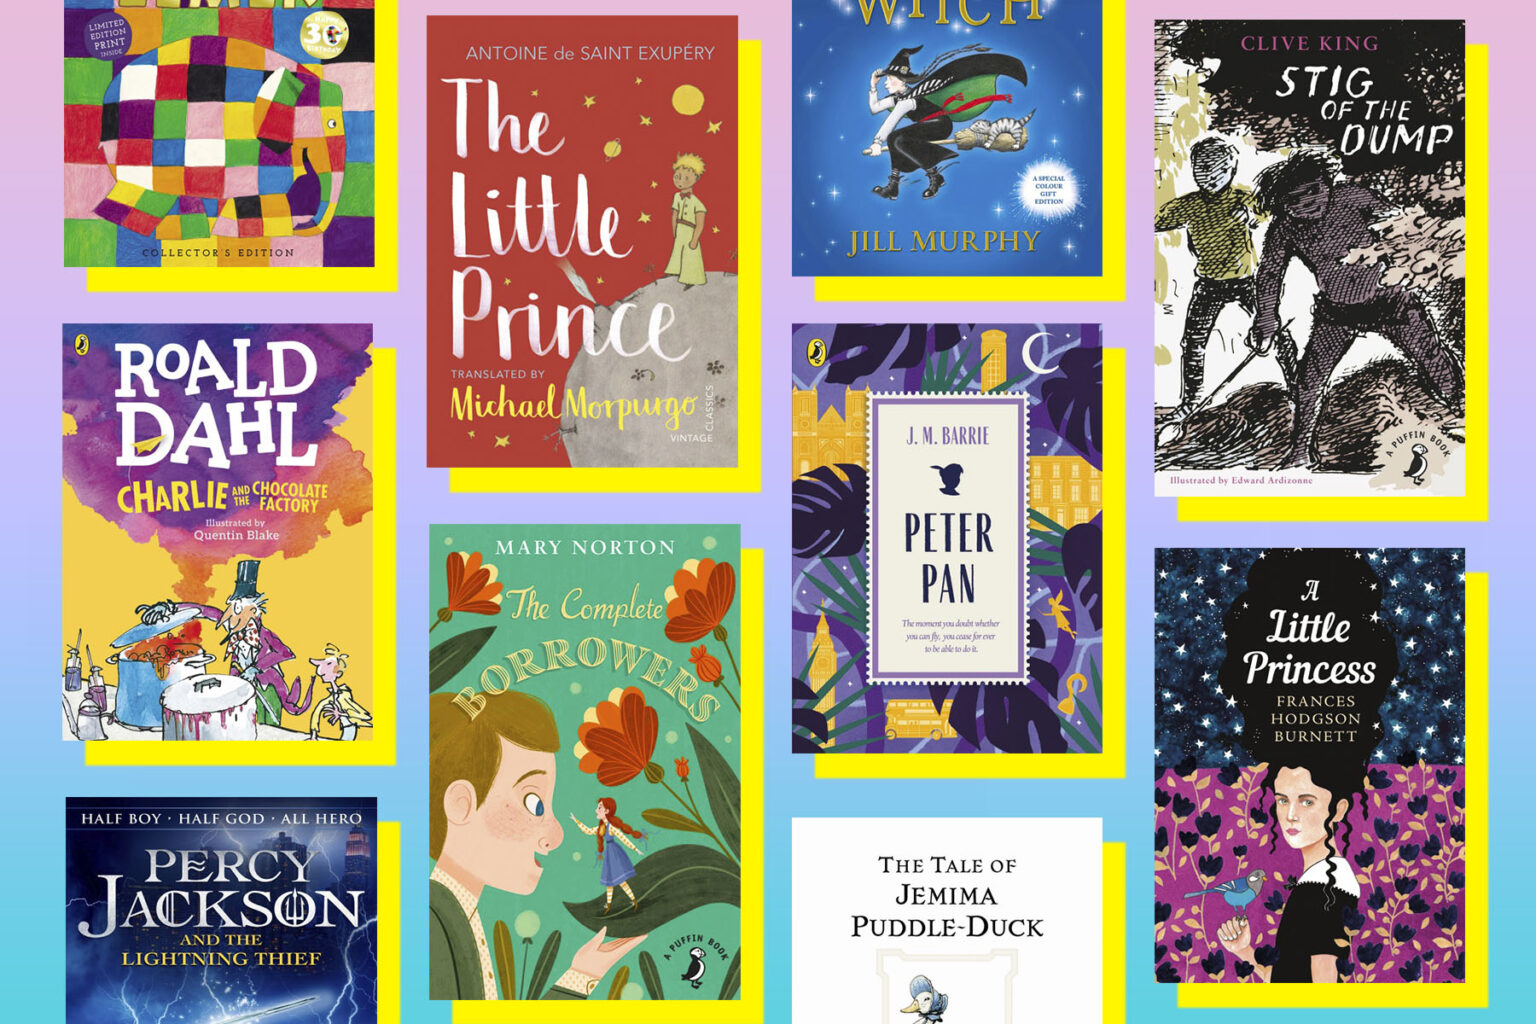 The 100 bestever children's books, as chosen by our readers